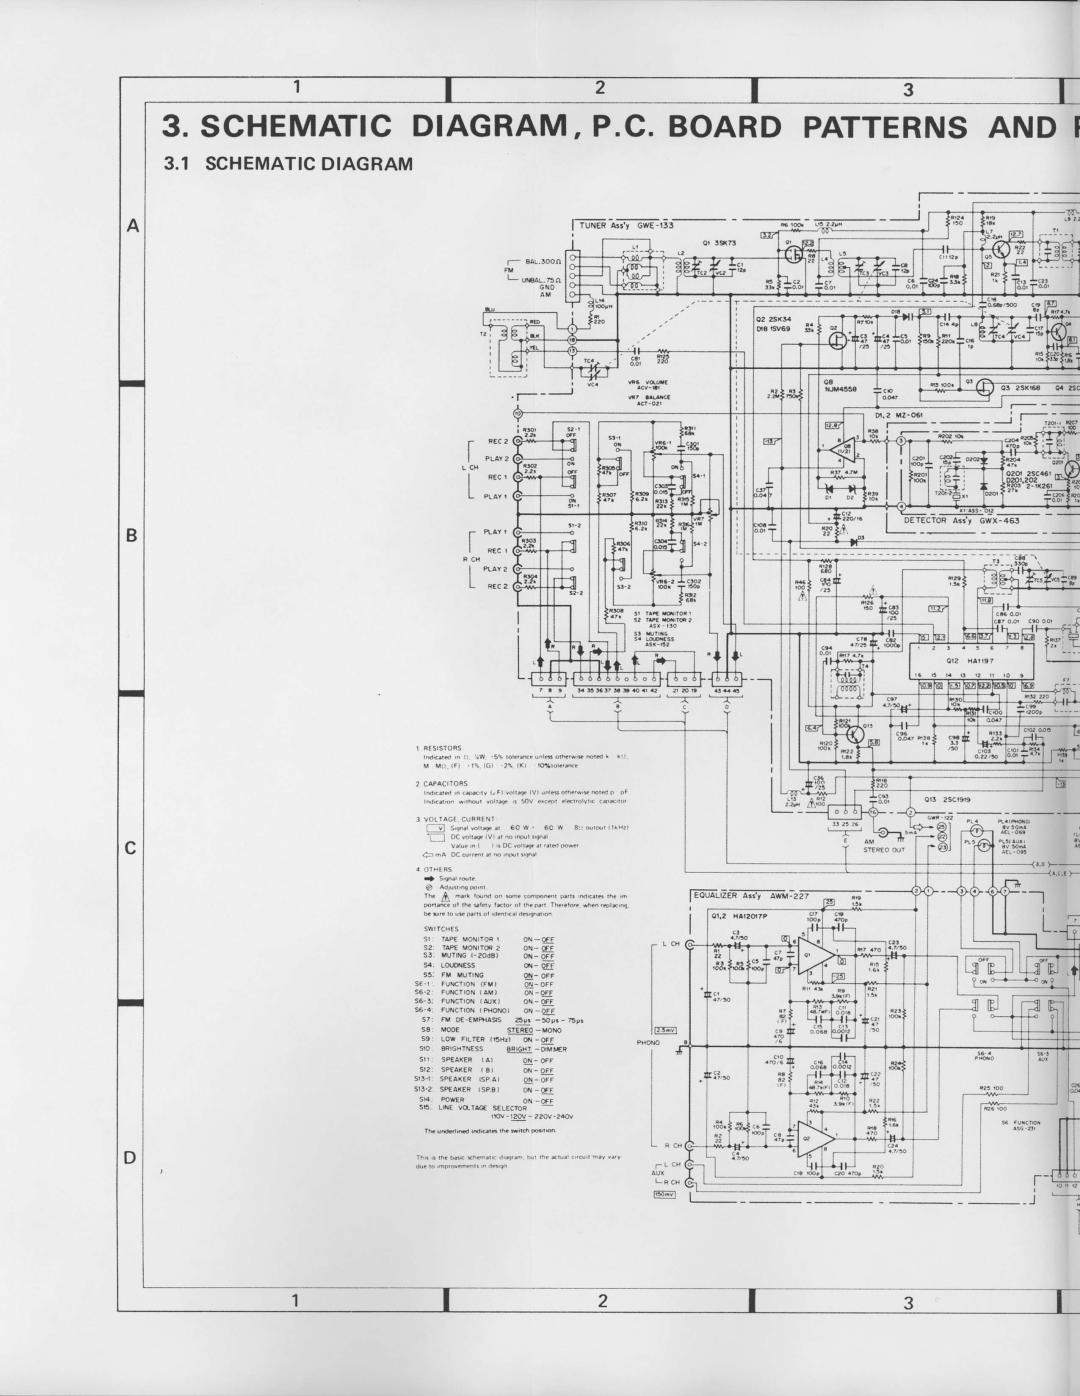 Pioneer SX-3800 manual Schematicdiagram,P.C. Board Patternsand, iBi ihl*cr, I l 